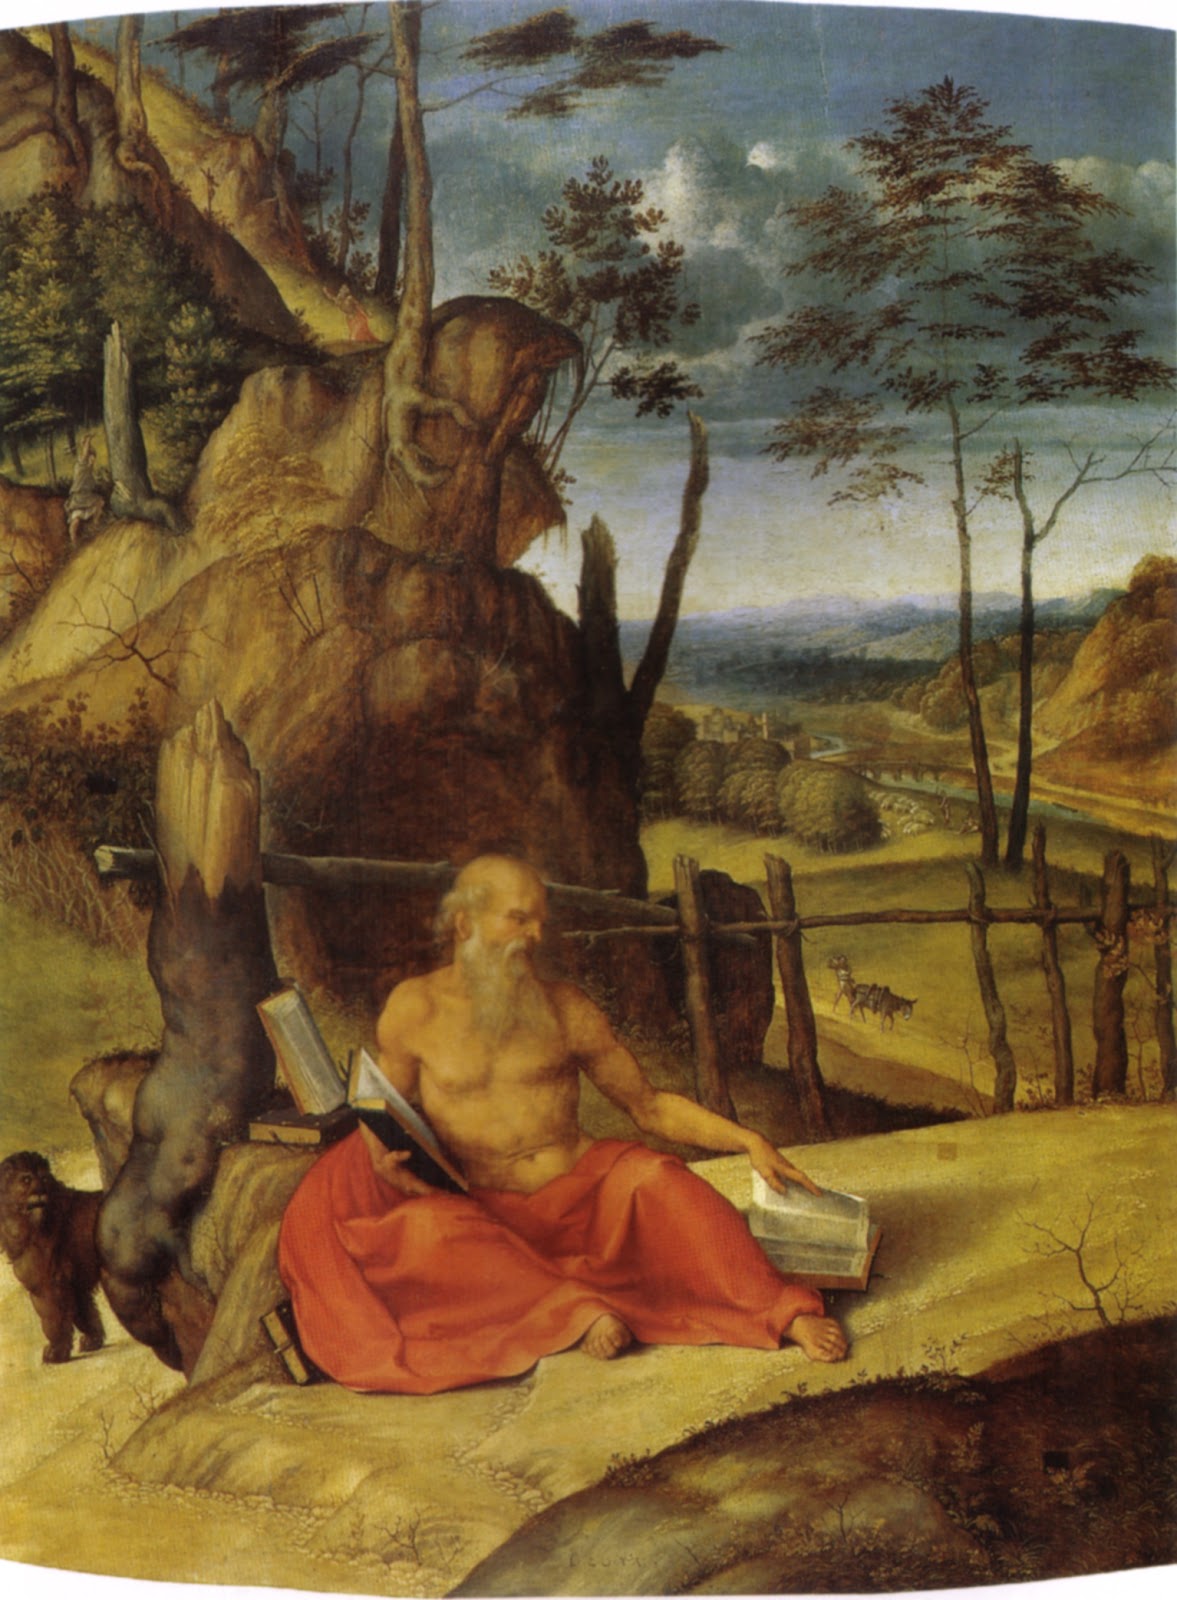 Lorenzo+Lotto-1480-1557 (100).jpg